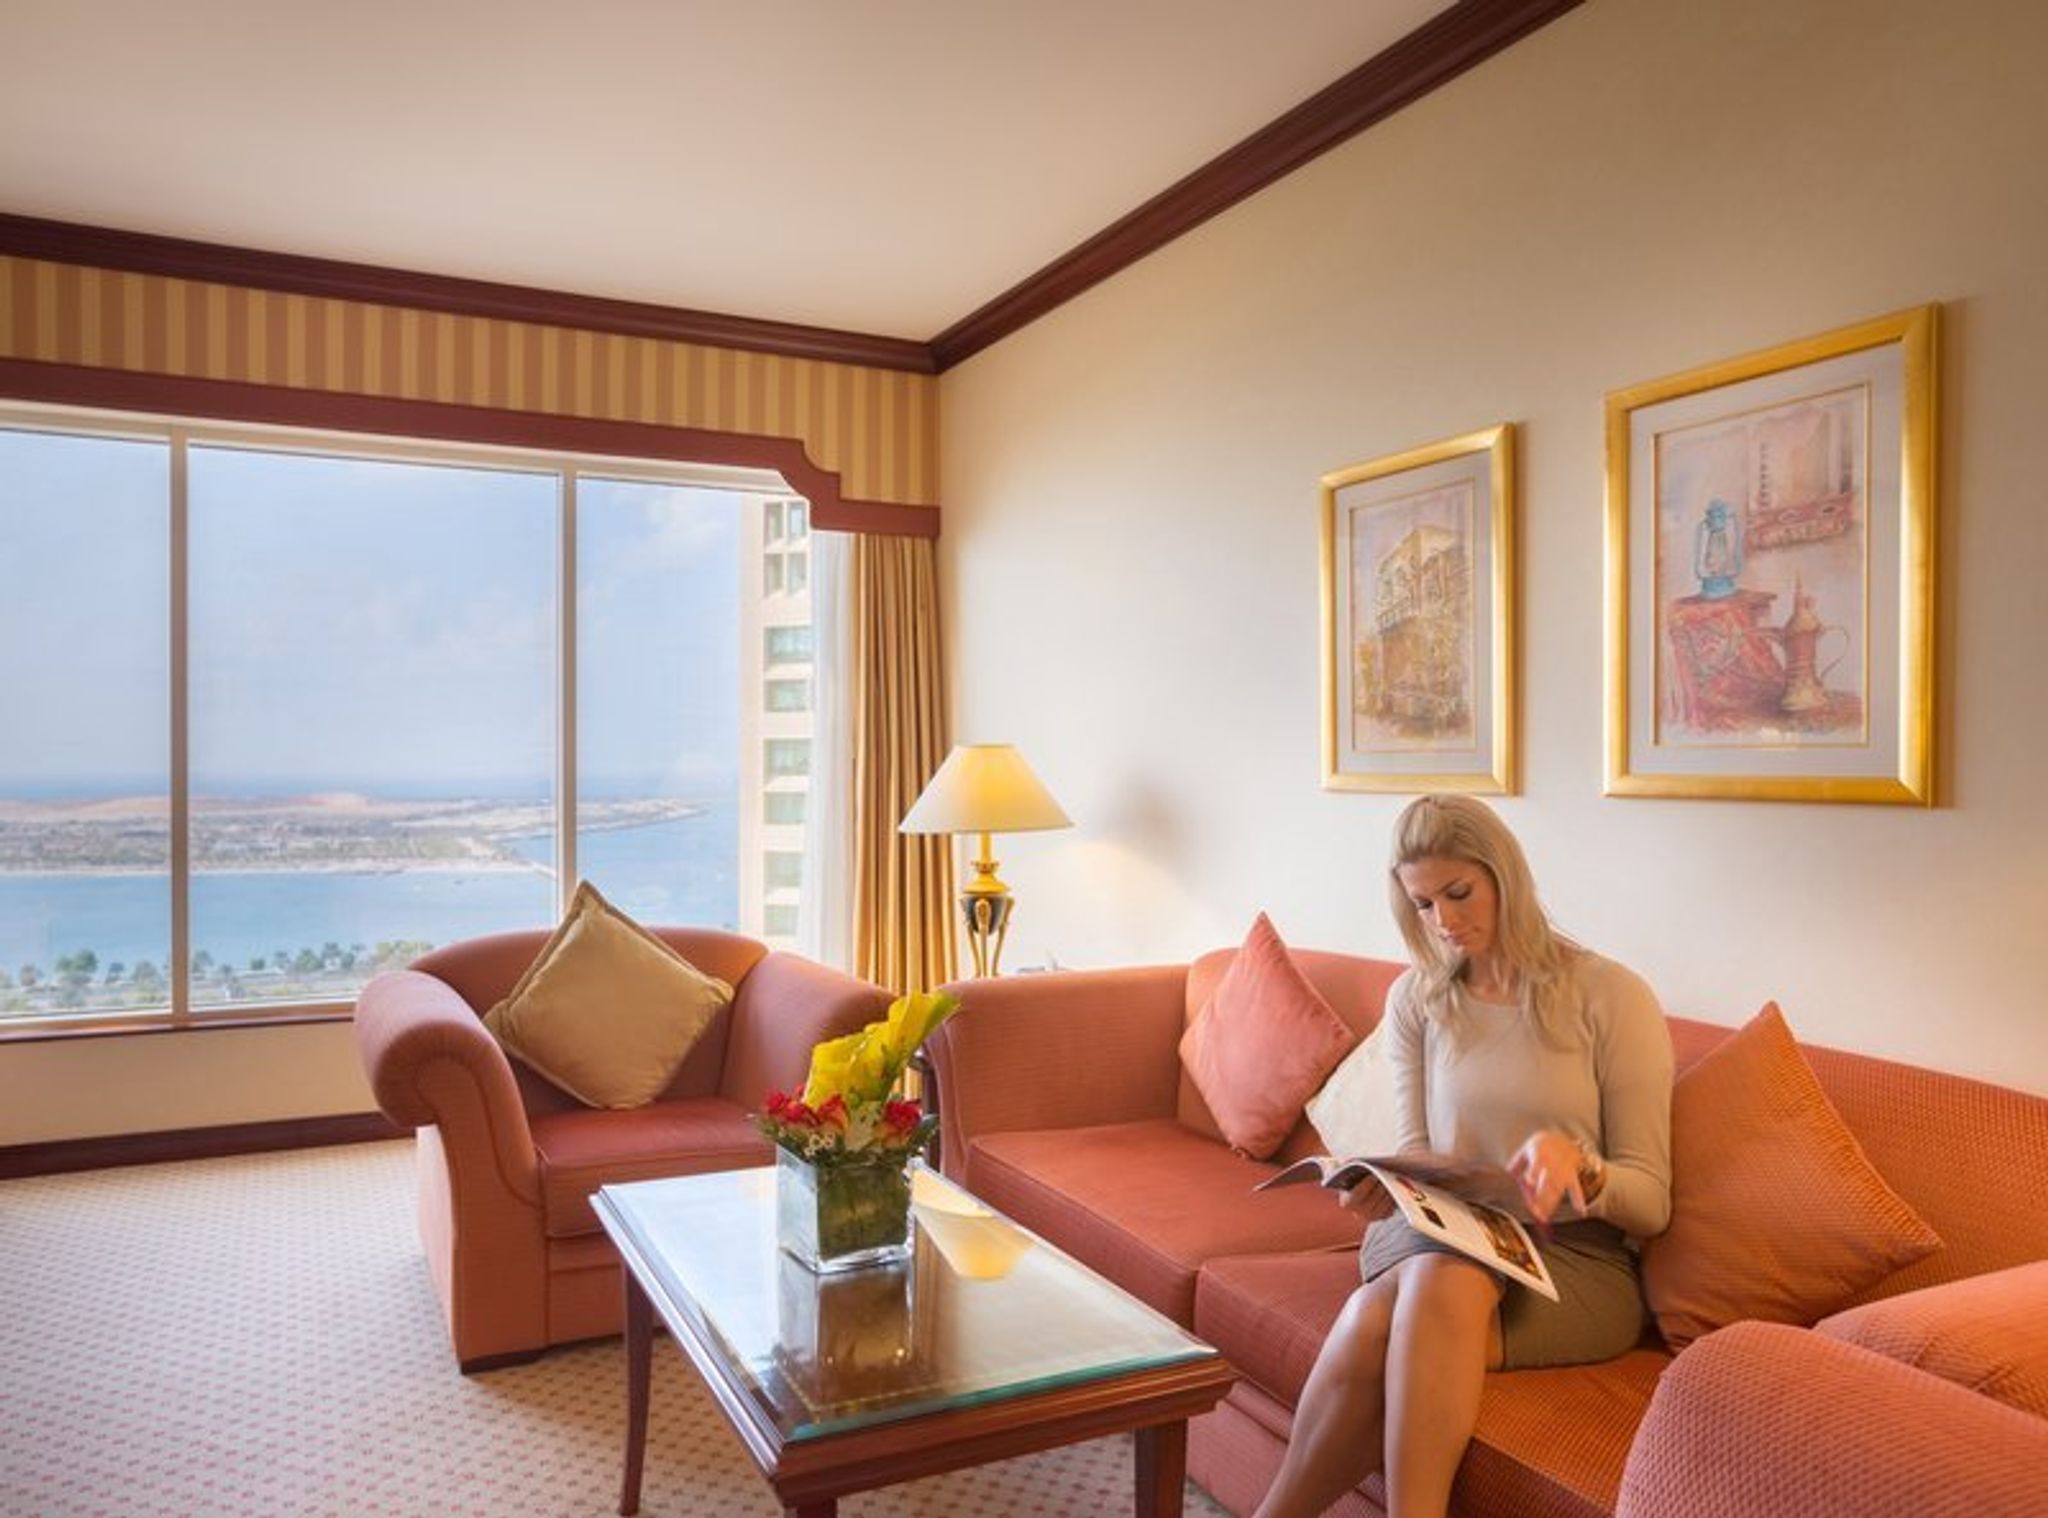 Radisson blu corniche. Корниш отель Абу Даби. Corniche Hotel Abu Dhabi 5*, ОАЭ. Конрич отель Абу Даби. Radisson Blu Hotel & Resort Abu Dhabi Corniche 5* пляж.